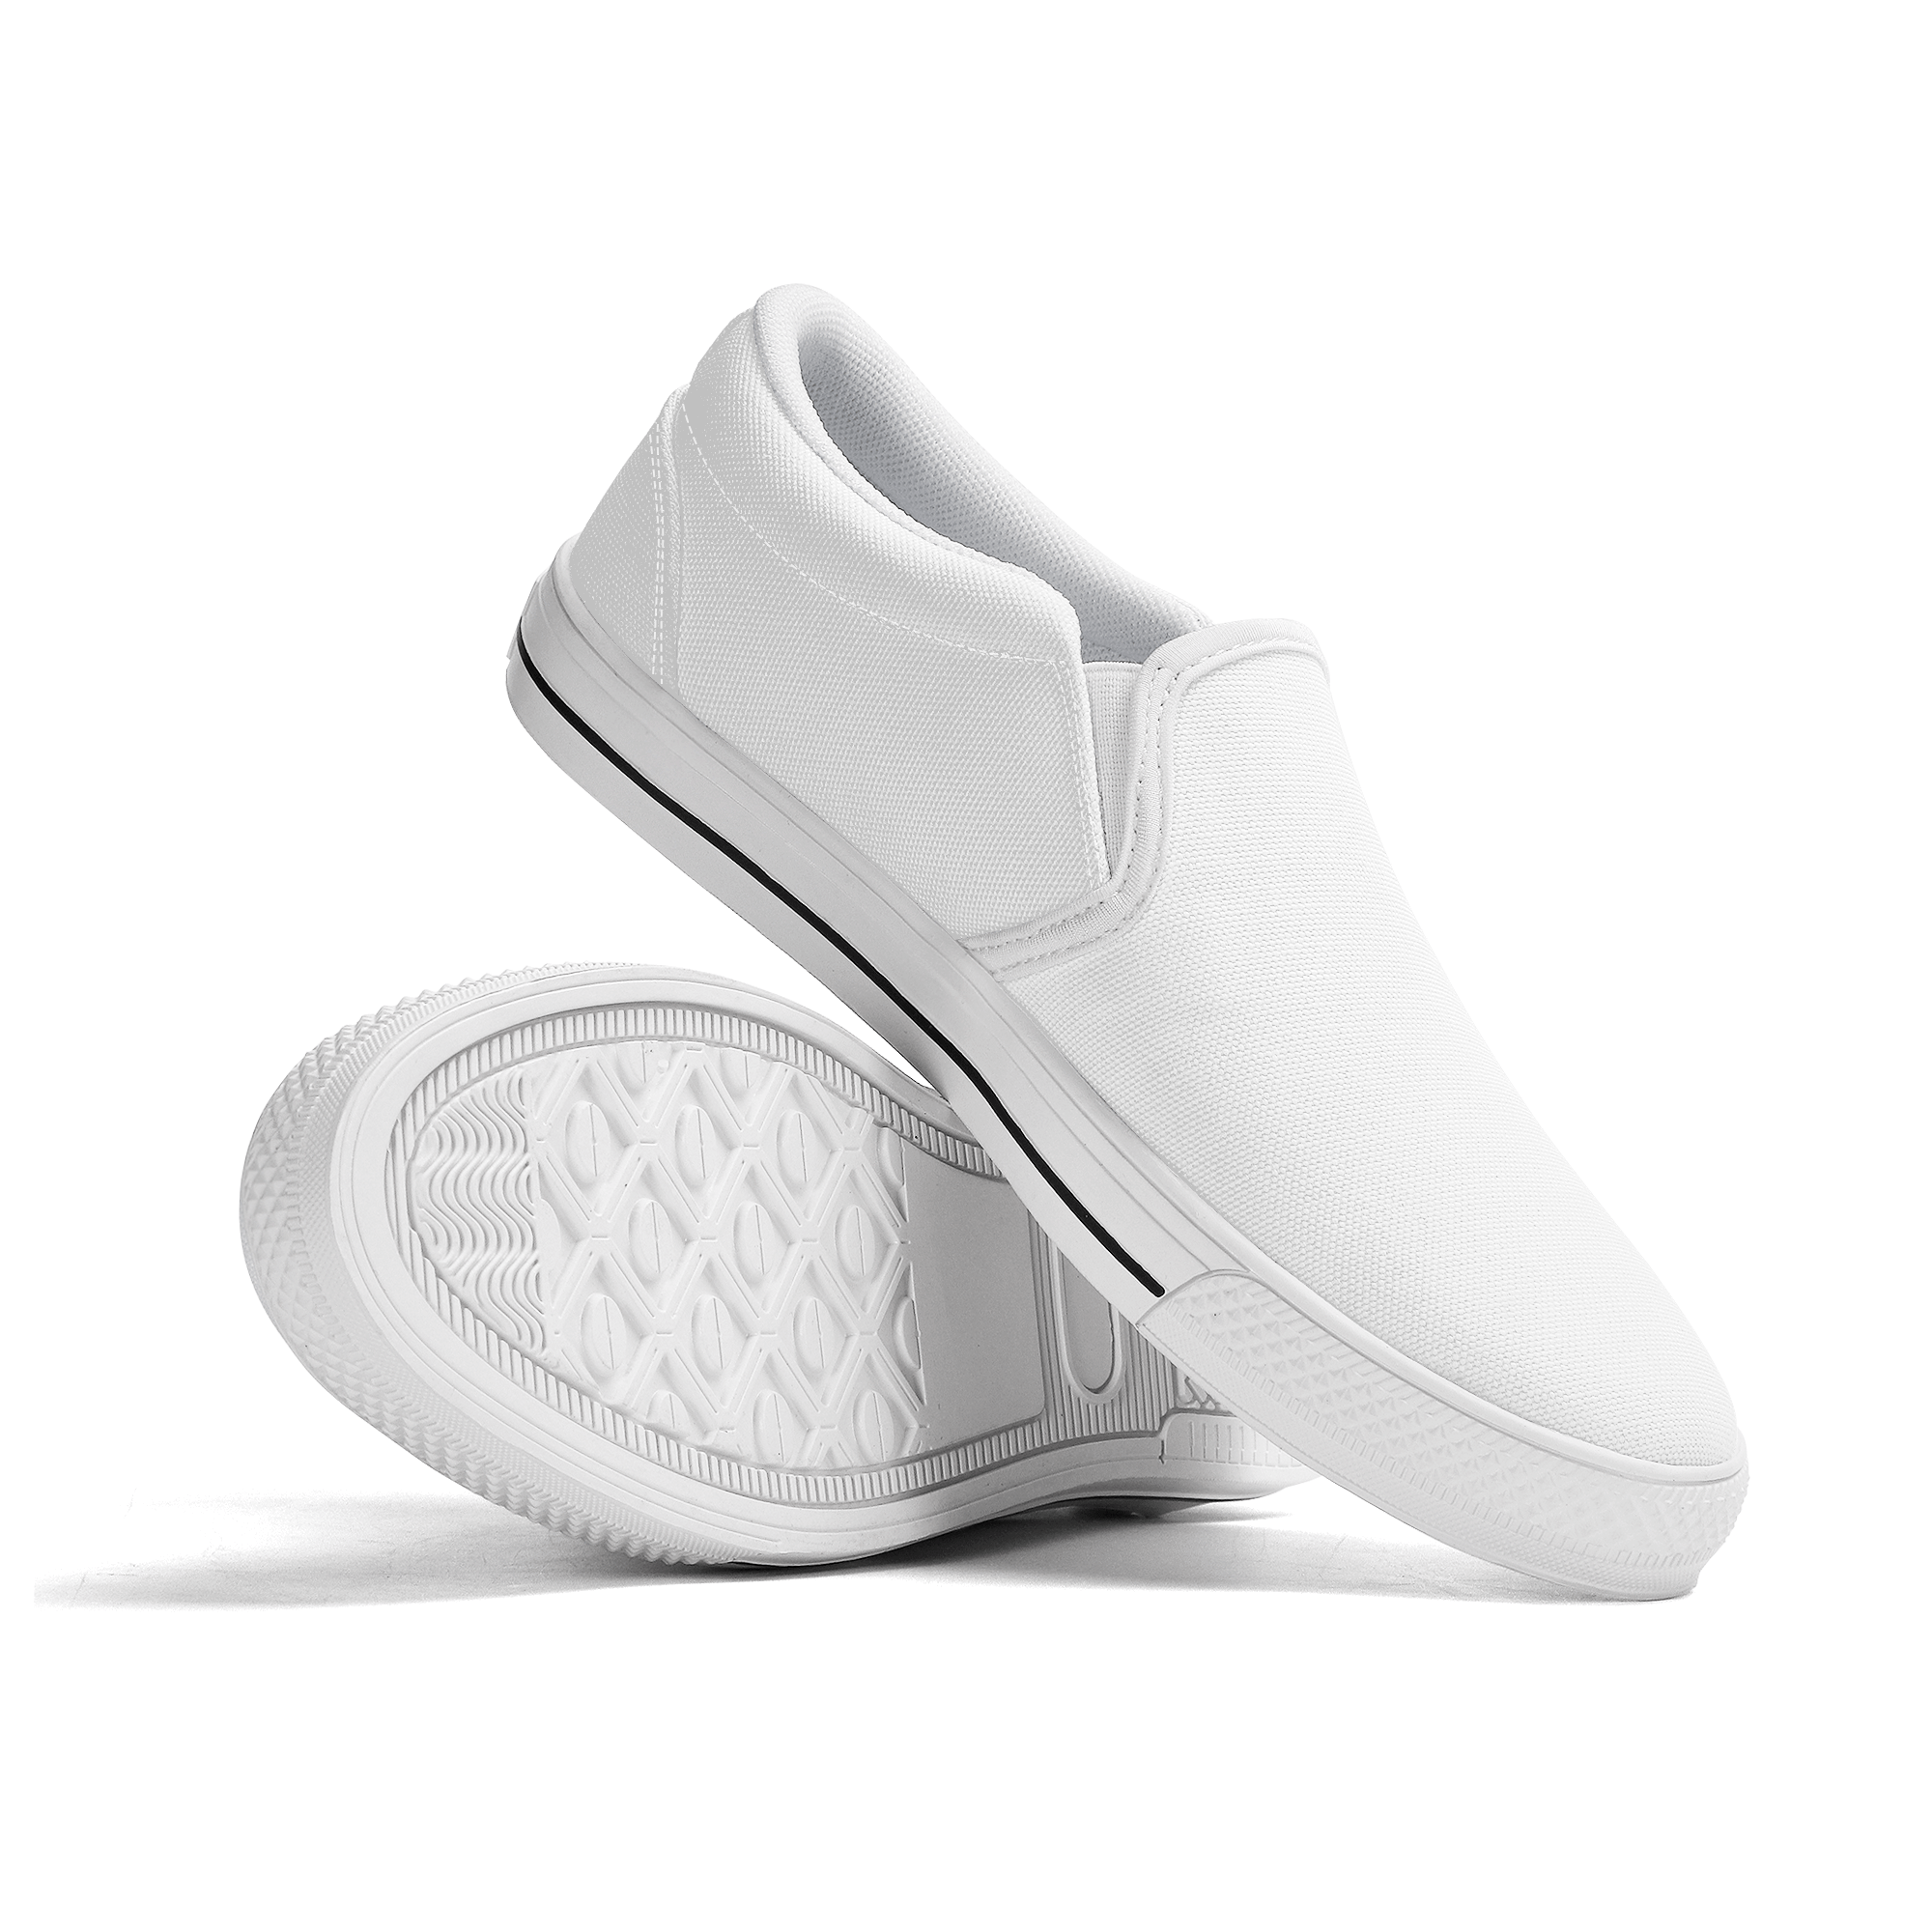 Customizable Slip-on Shoes | Design your own | Shoe Zero